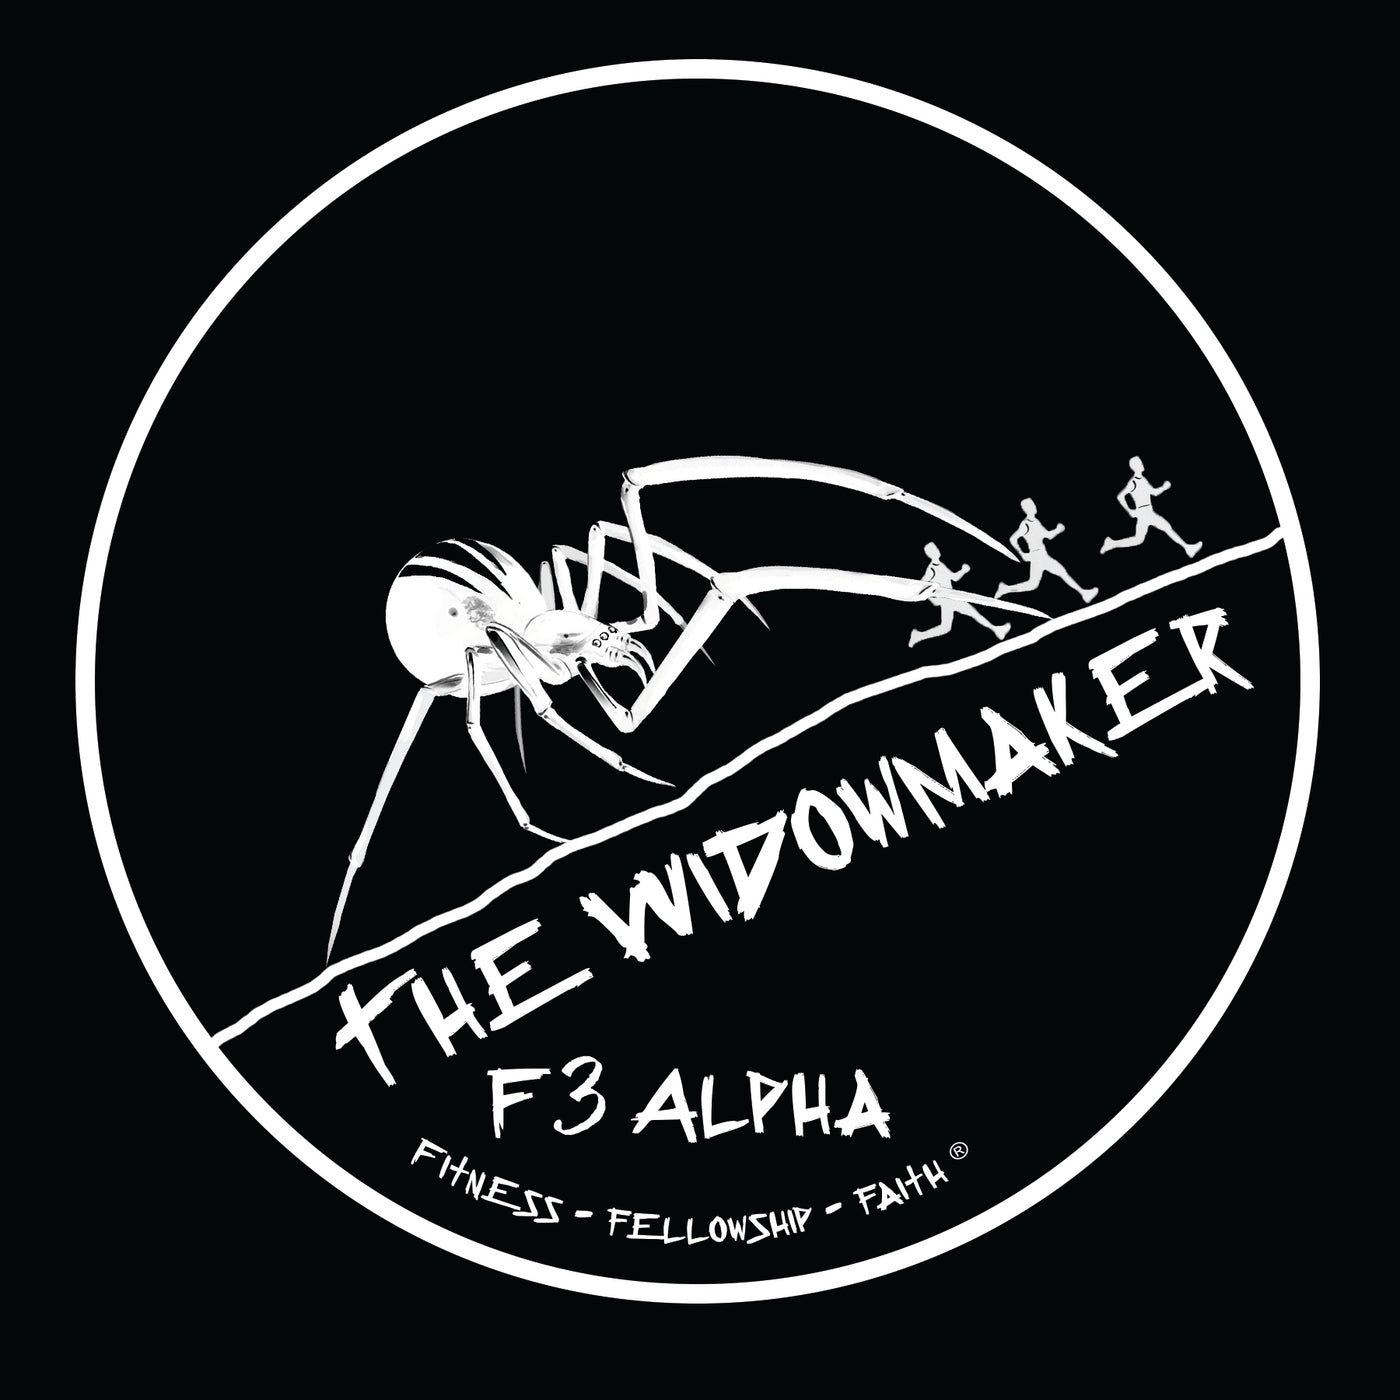 F3 Alpha The Widowmaker Pre-Order October 2021